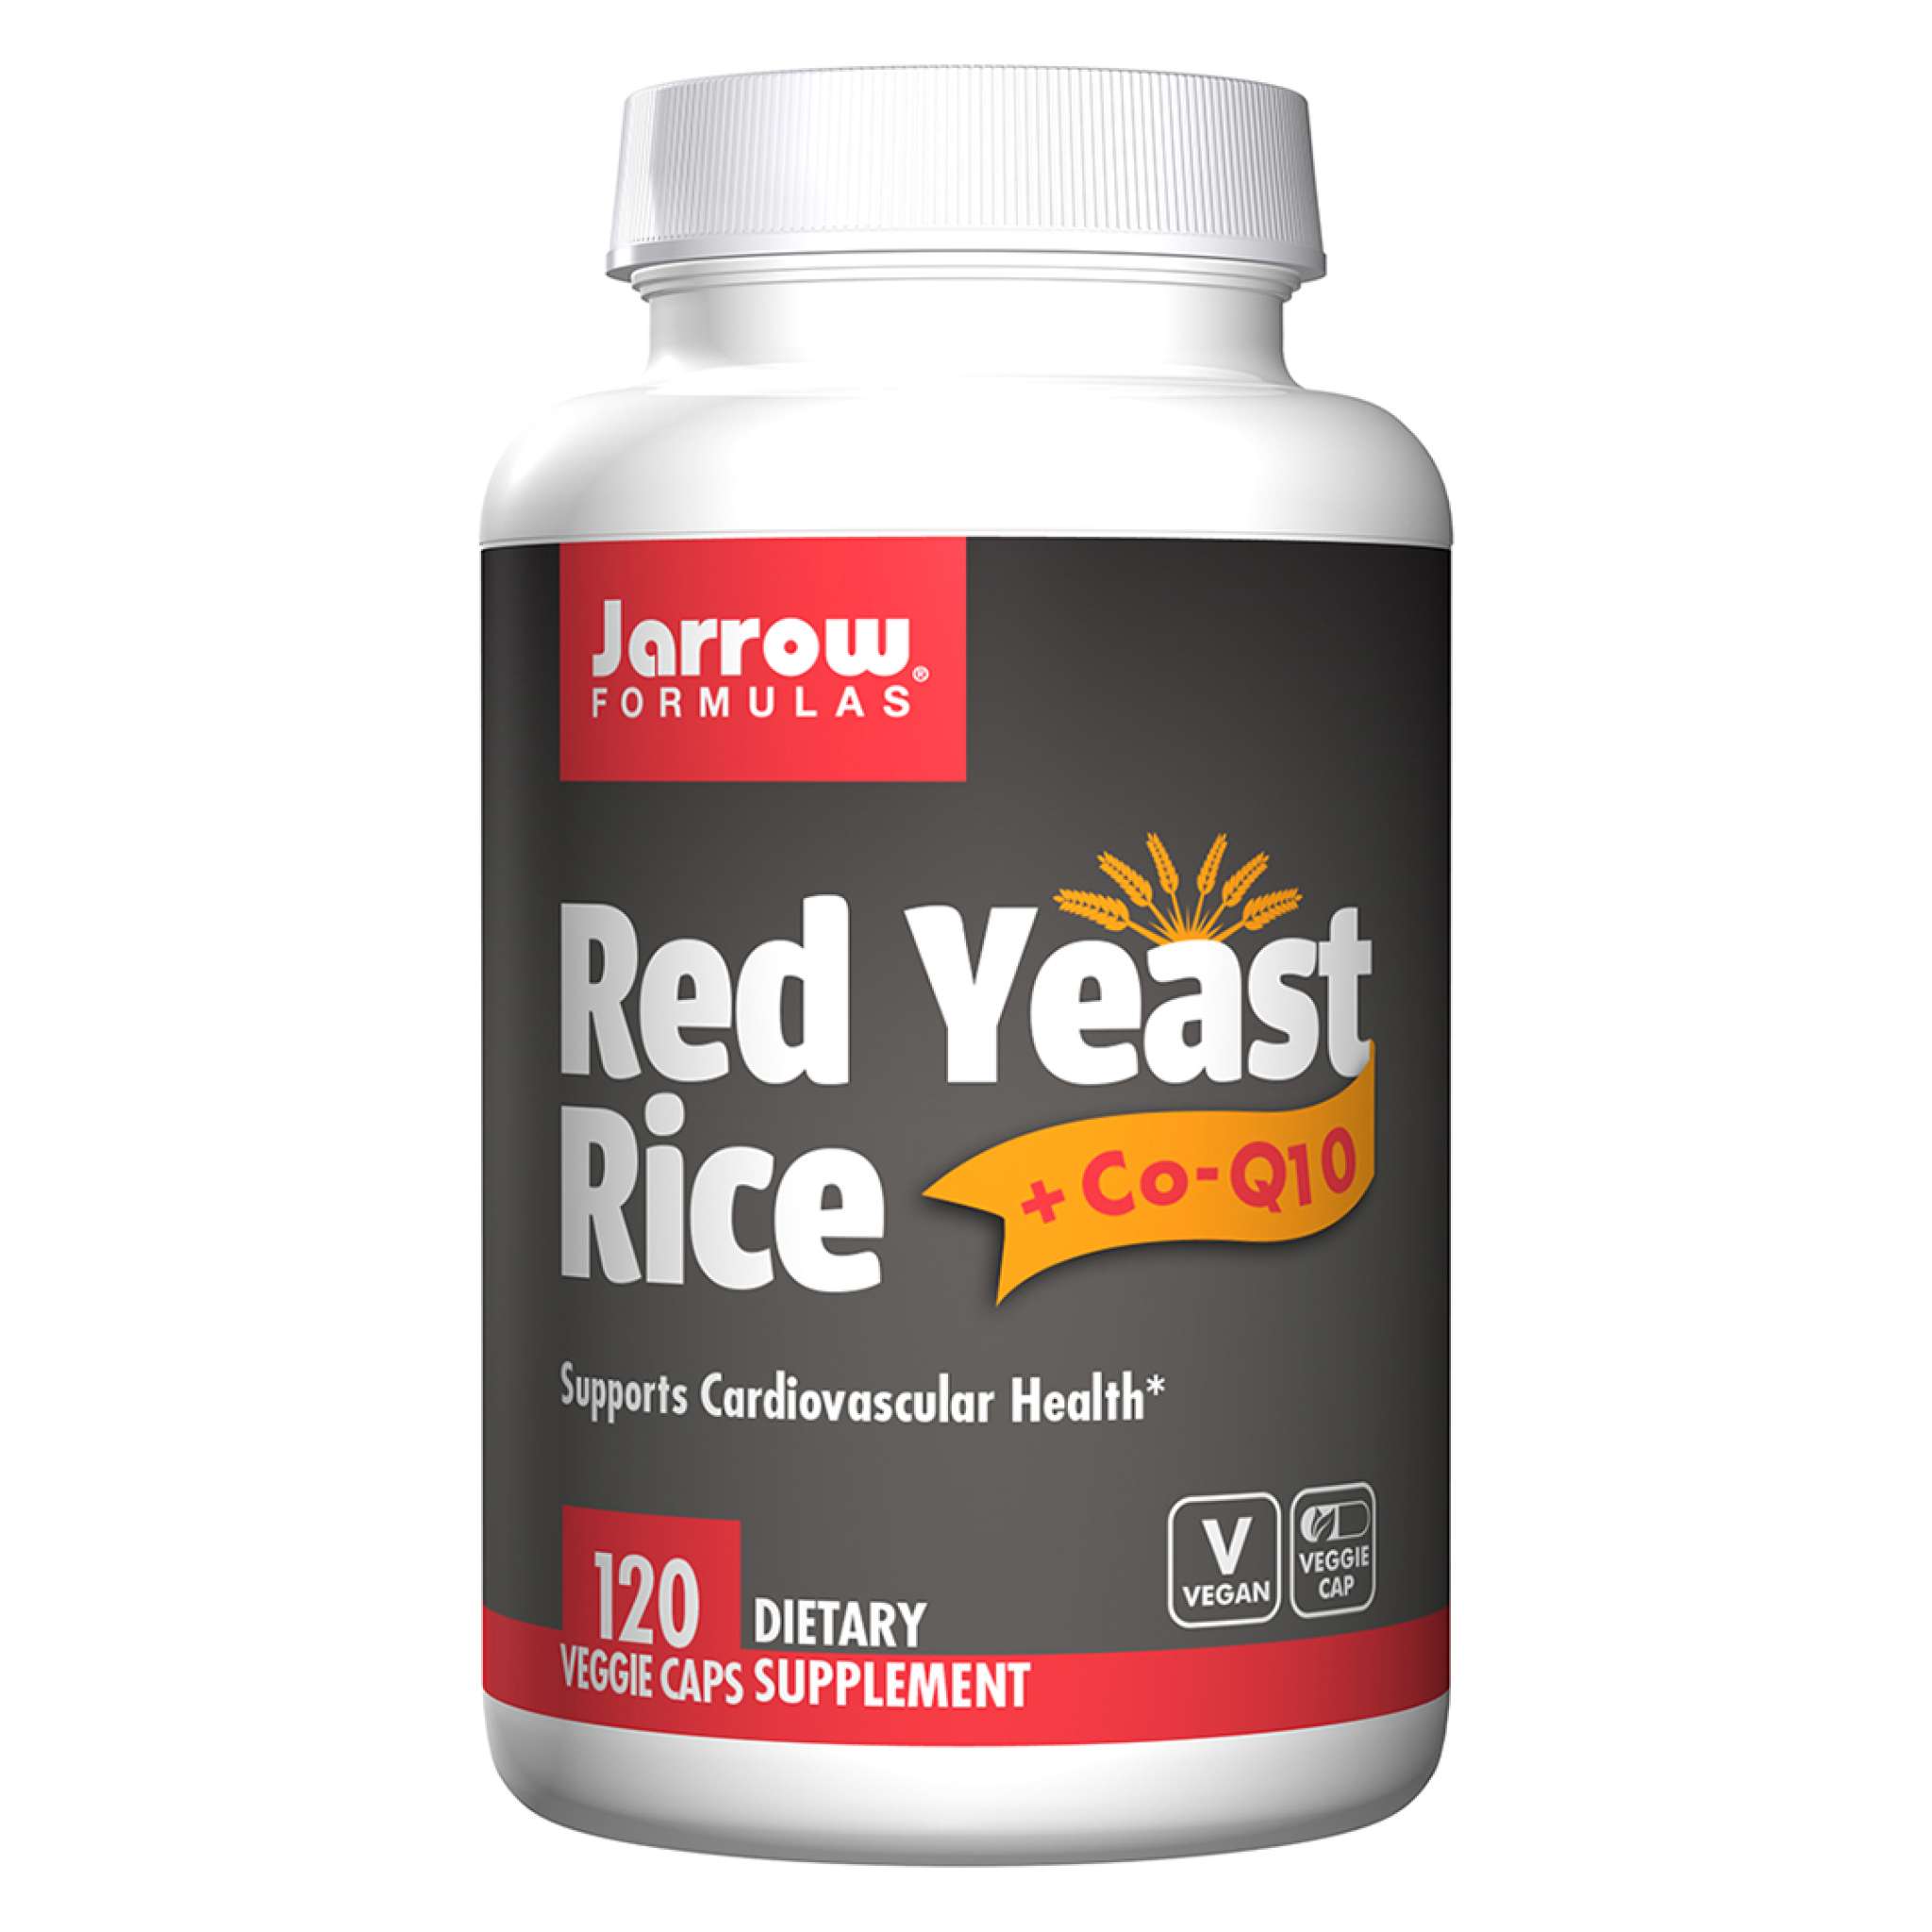 Jarrow Formulas - Red Yeast Rice + Coq10